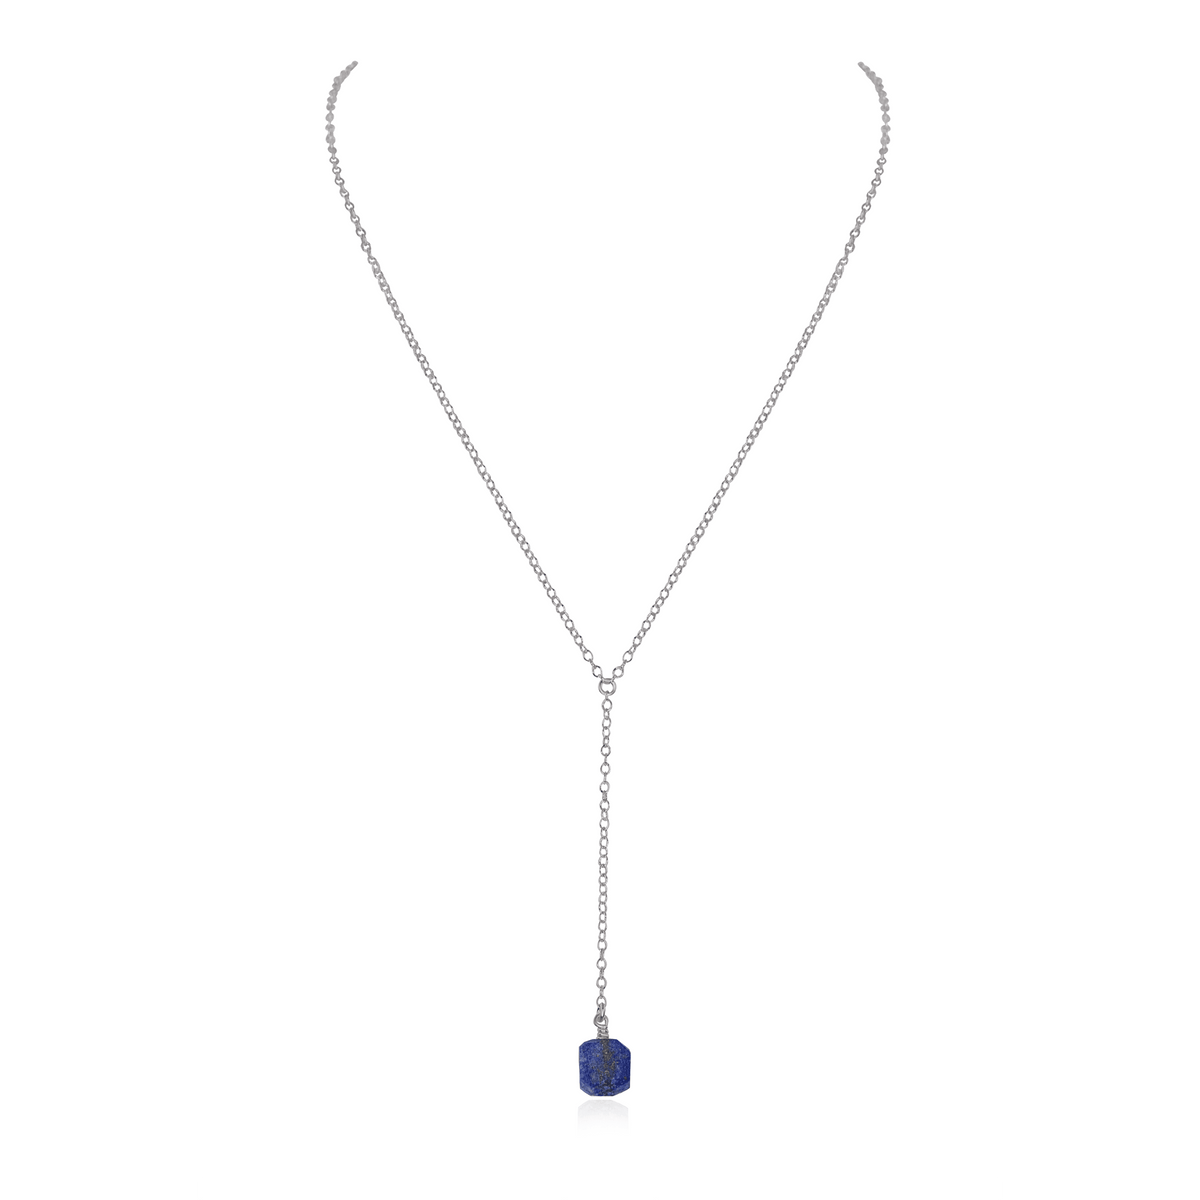 Raw Lapis Lazuli Crystal Lariat Necklace - Raw Lapis Lazuli Crystal Lariat Necklace - Stainless Steel - Luna Tide Handmade Crystal Jewellery